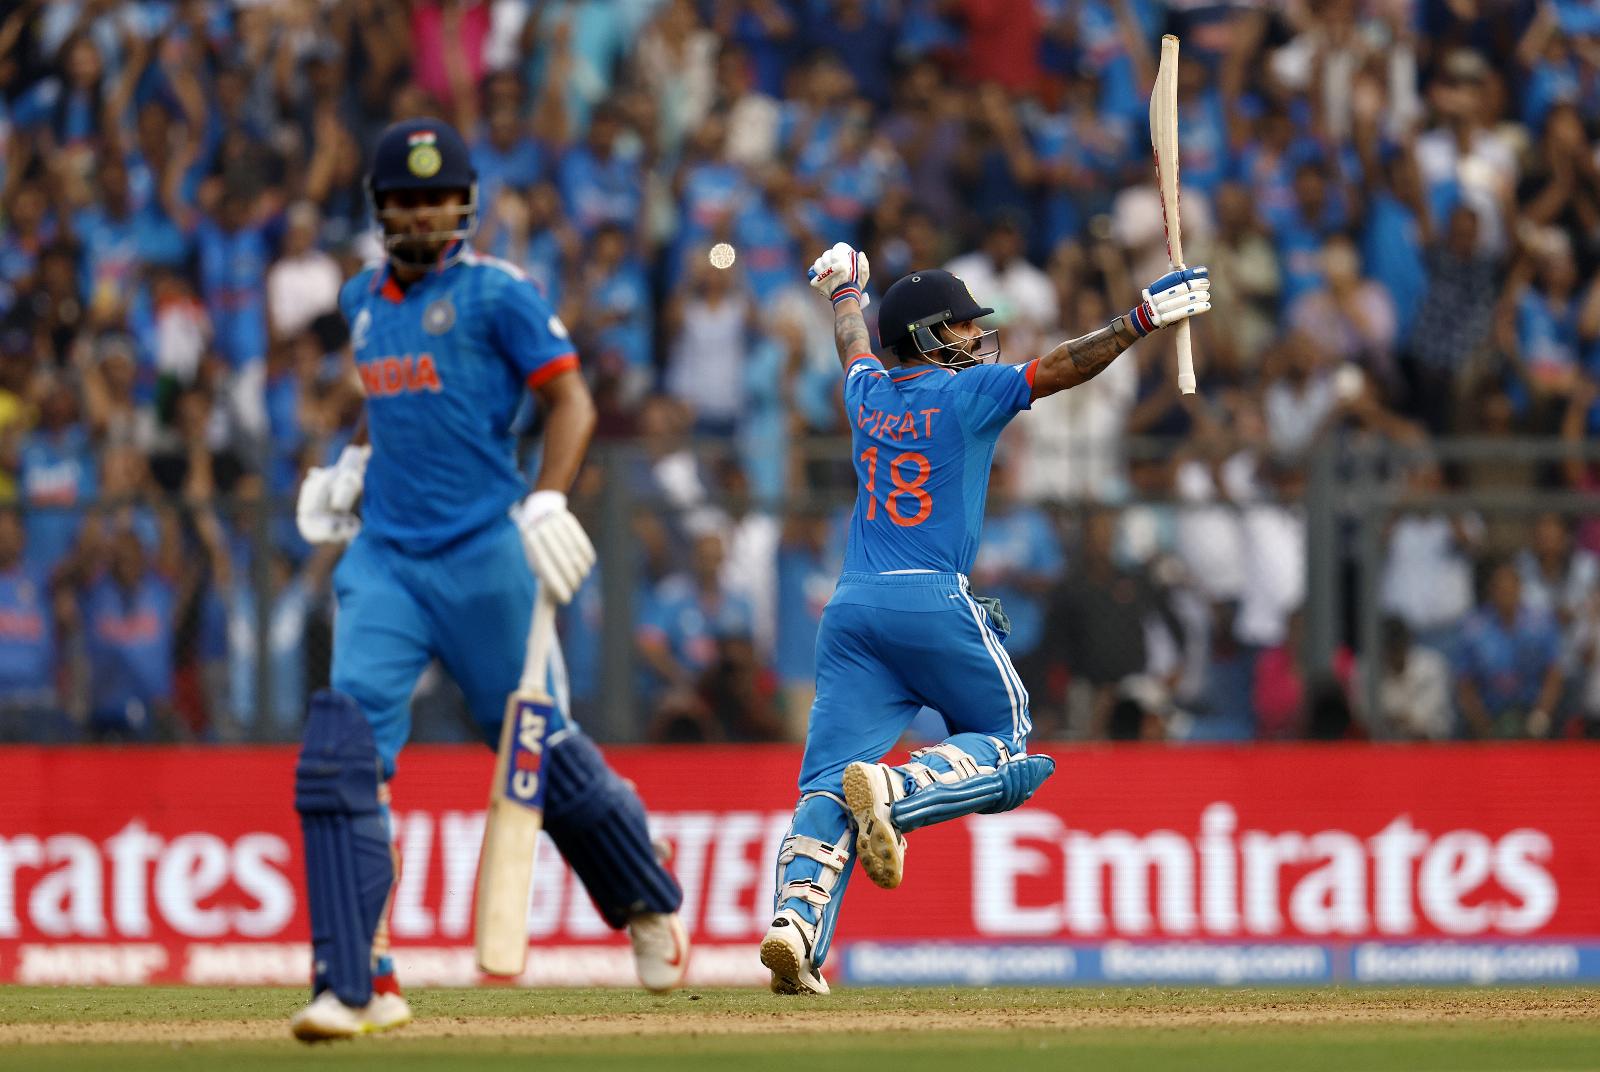 Disney’s Hotstar tops 50 million concurrent viewers in India-New Zealand cricket clash